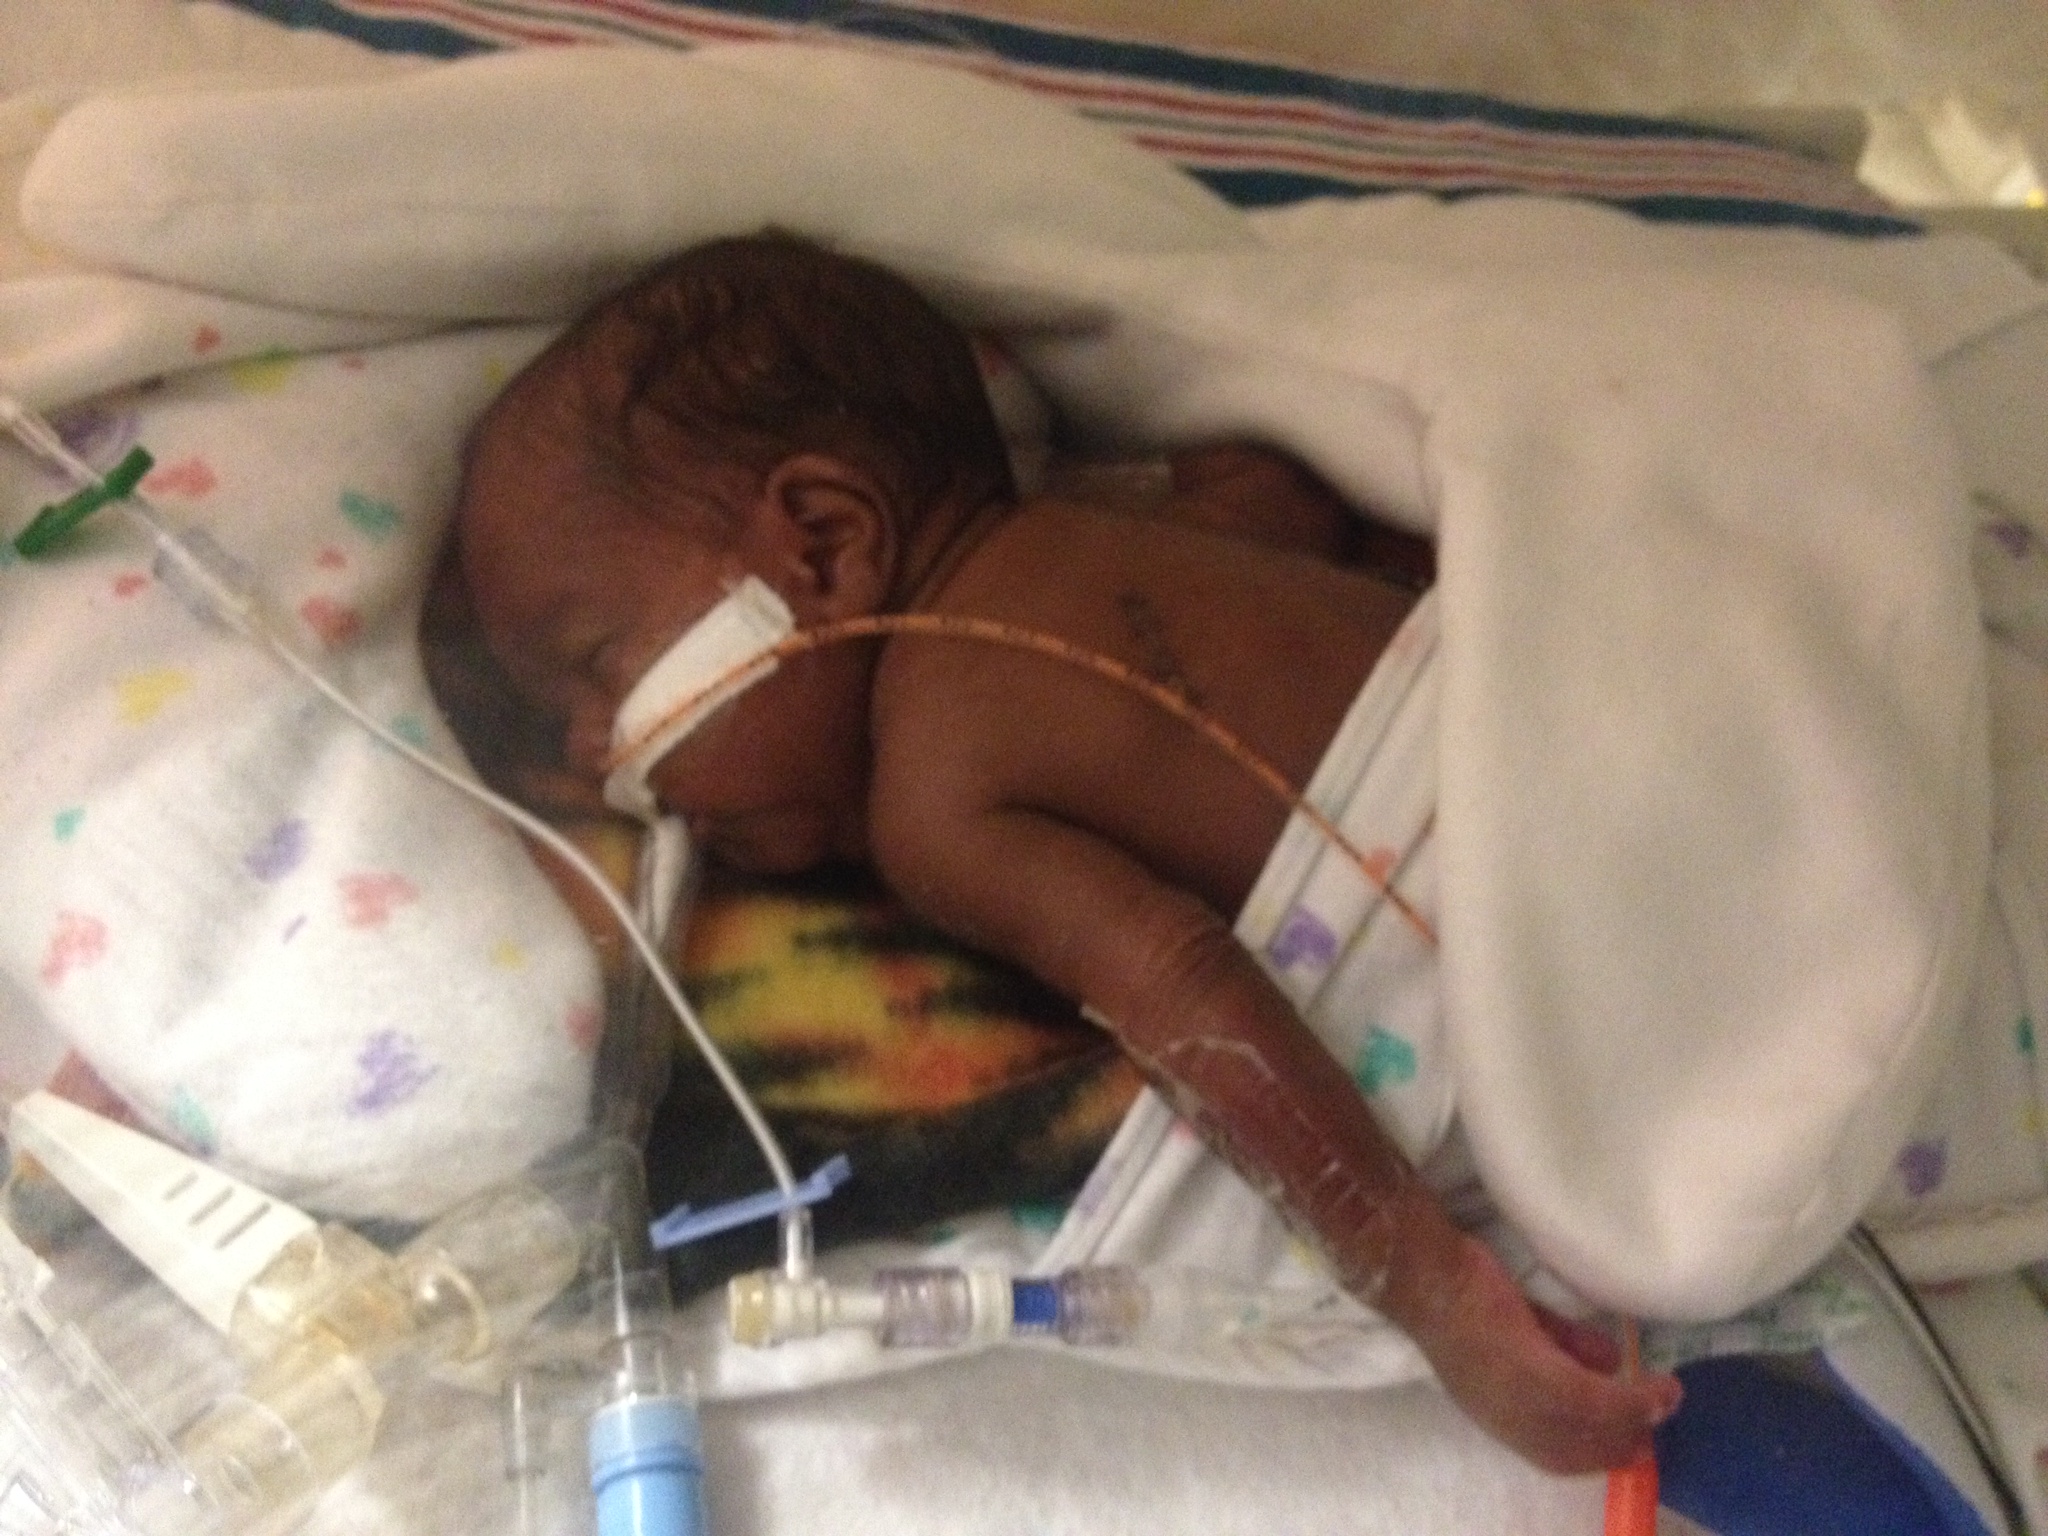 Premature infant in NICU

T. Leverett 2013